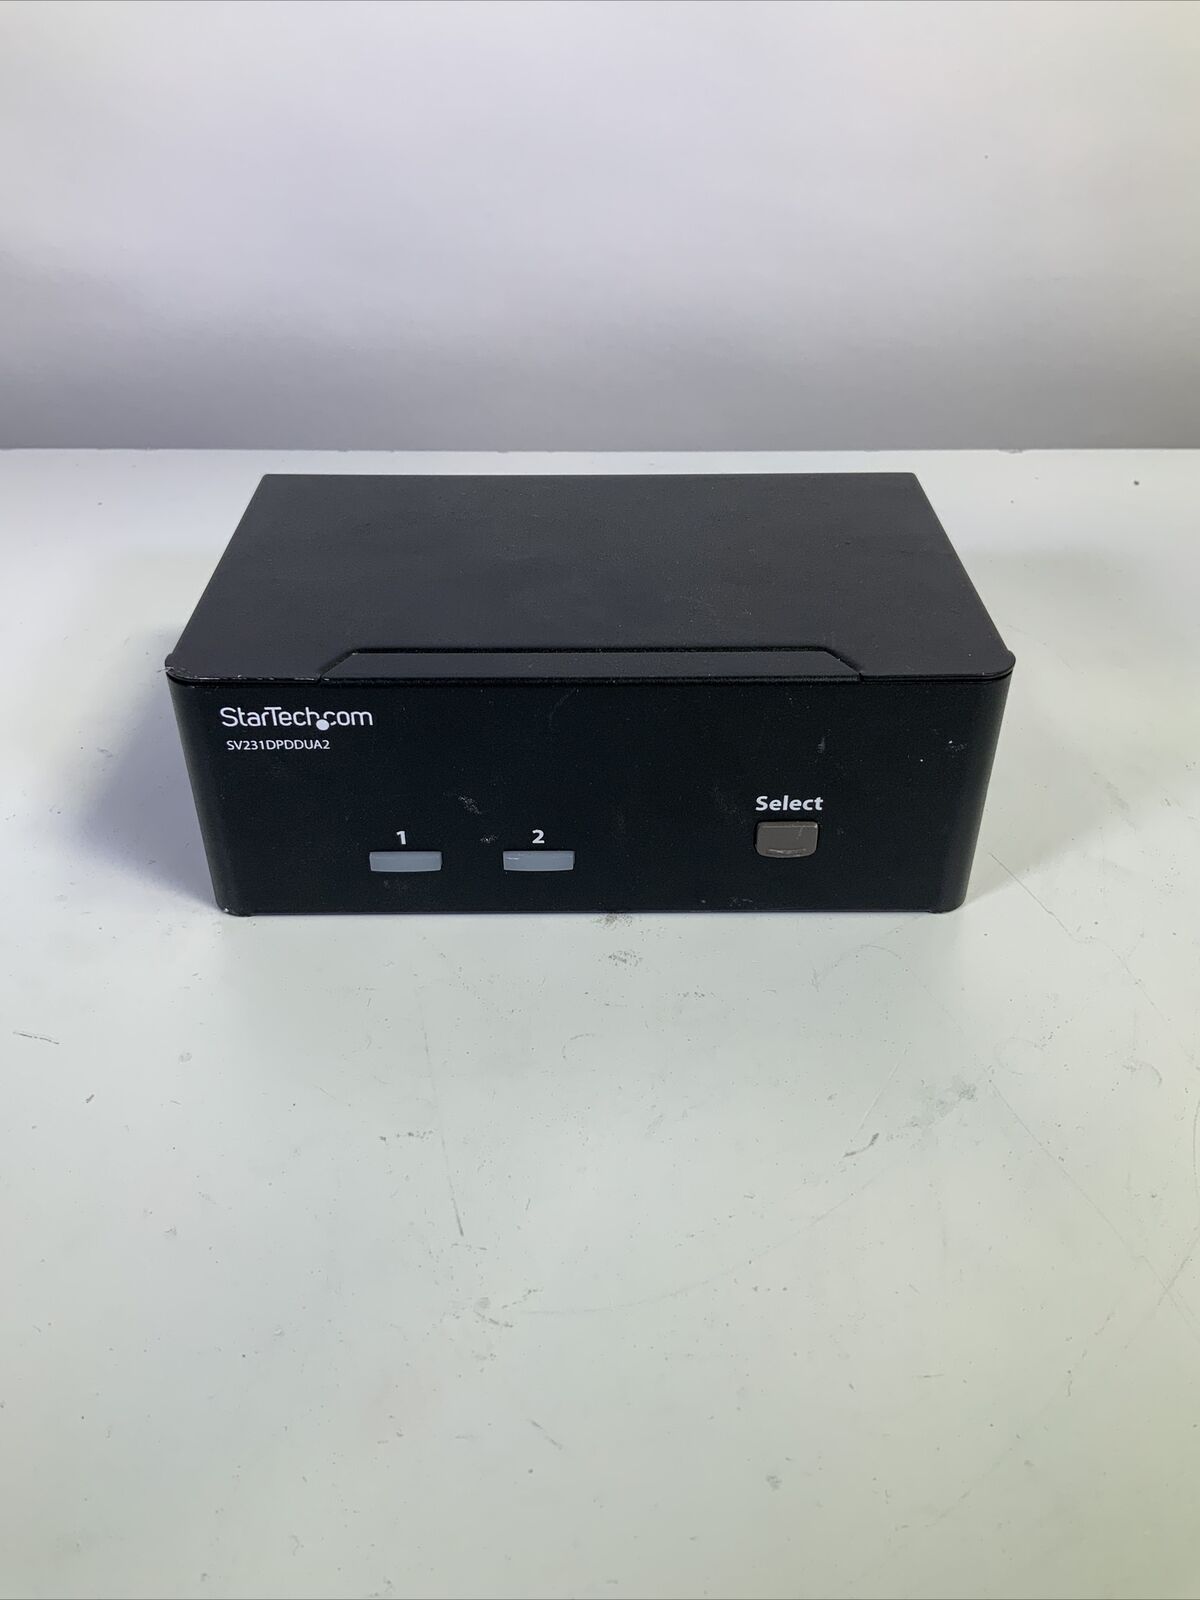 StarTech.com SV231DPDDUA2 Port Dual DVI USB KVM Switch - NG D1E